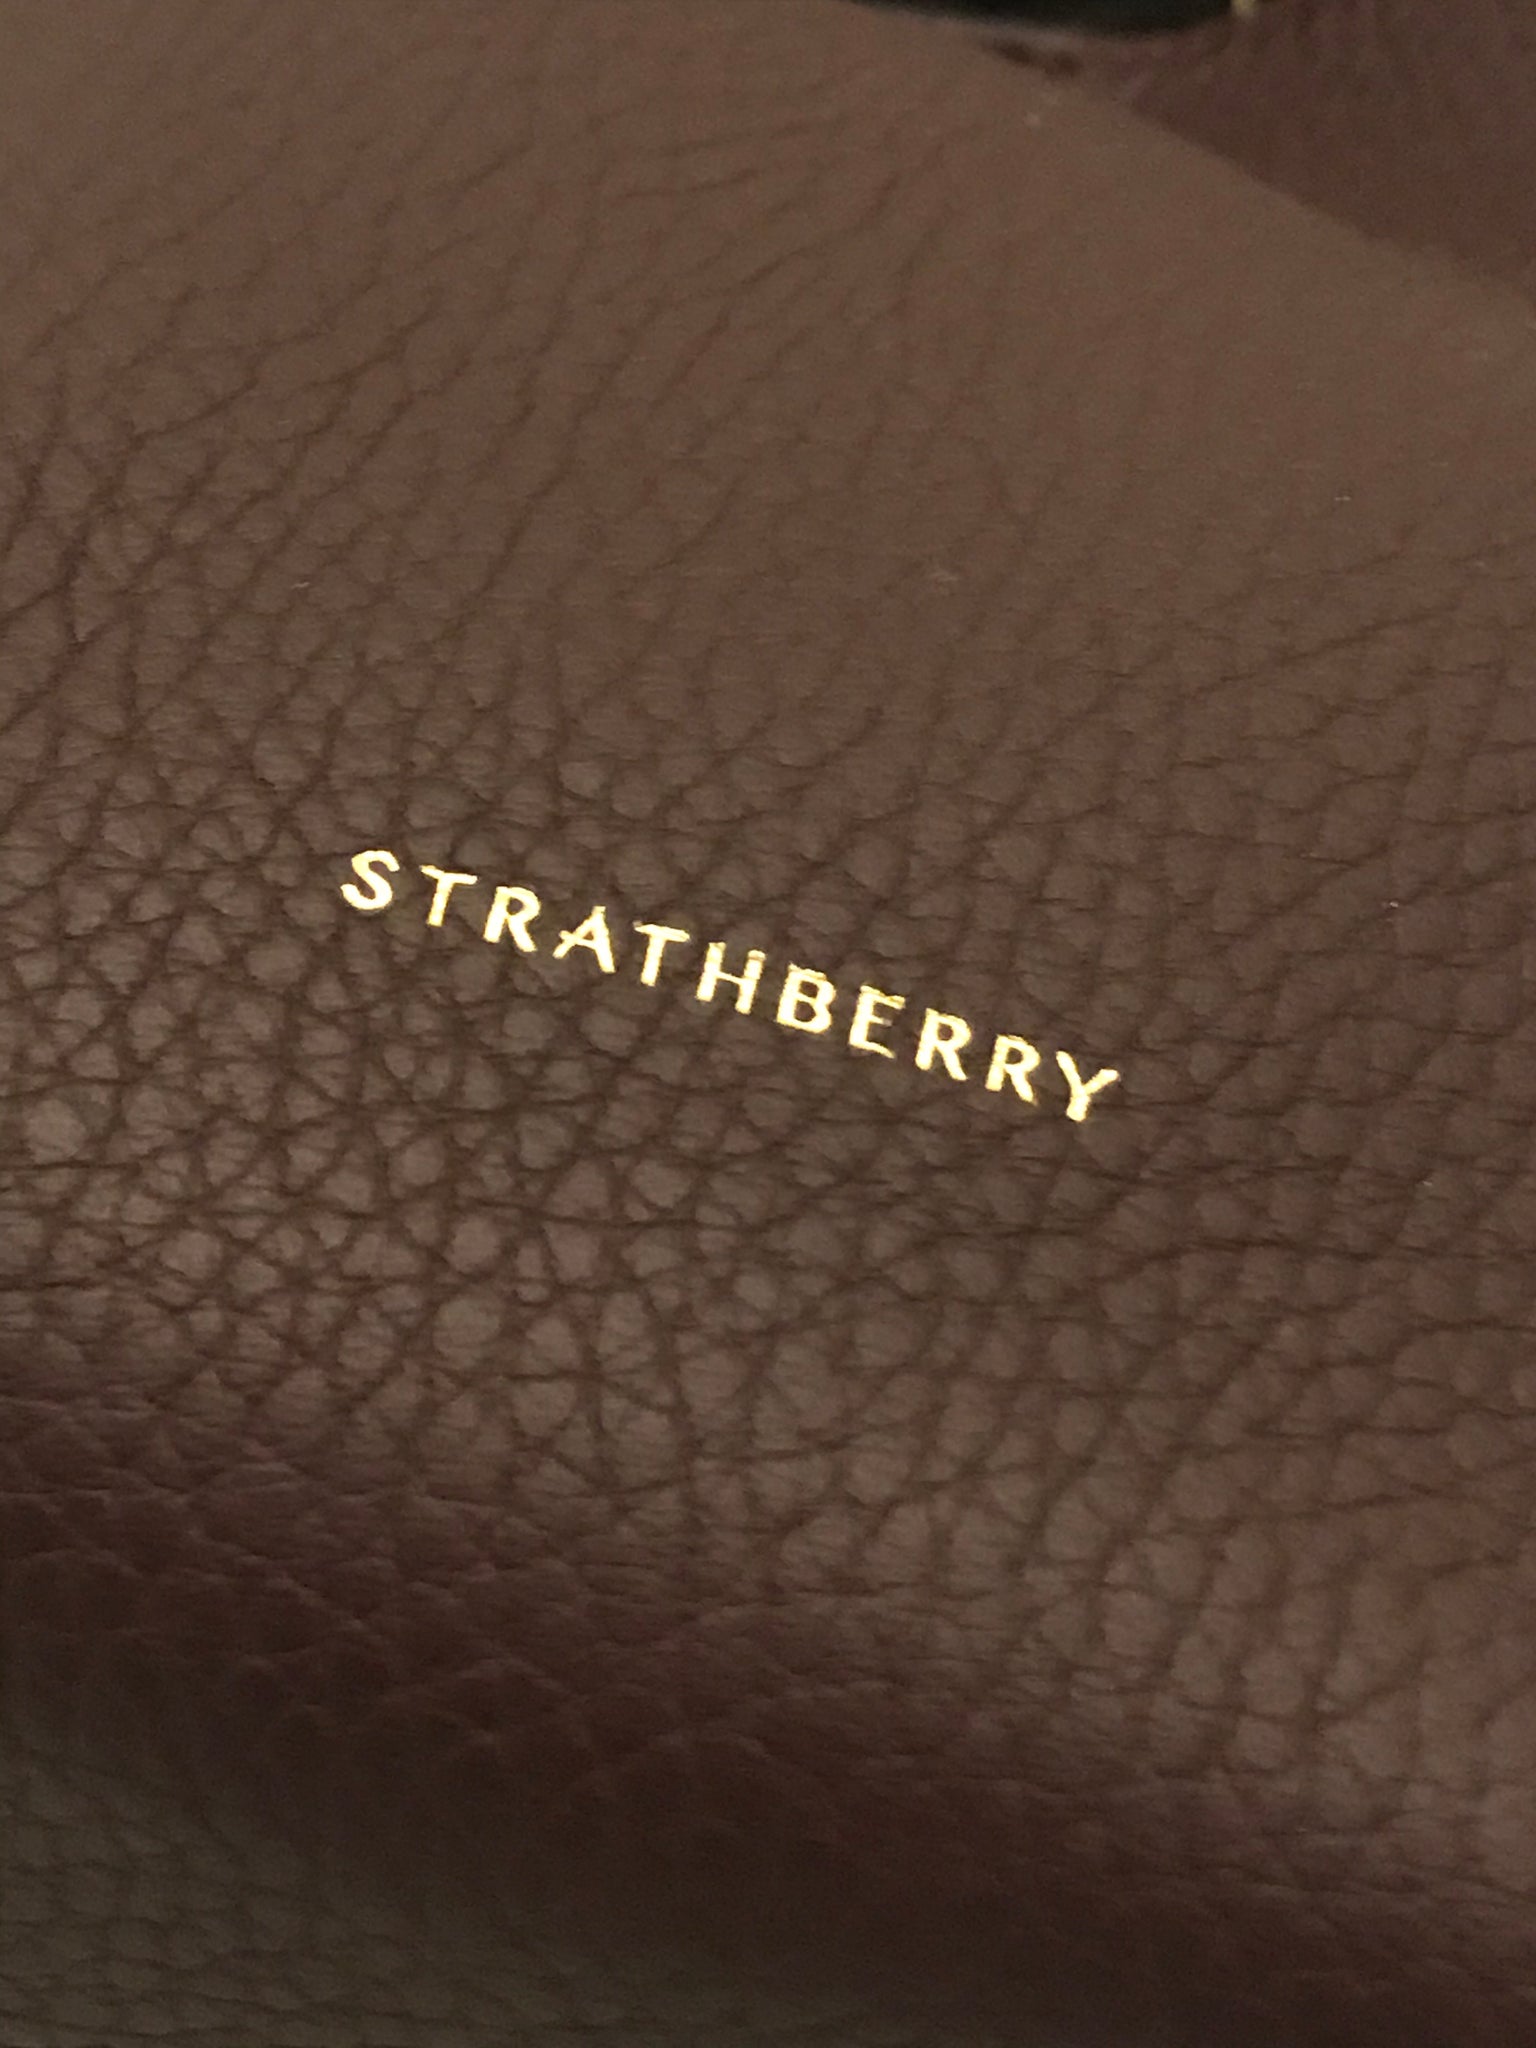 Strathberry - AW19 // Lana Nano Bucket Bag and Lana Midi